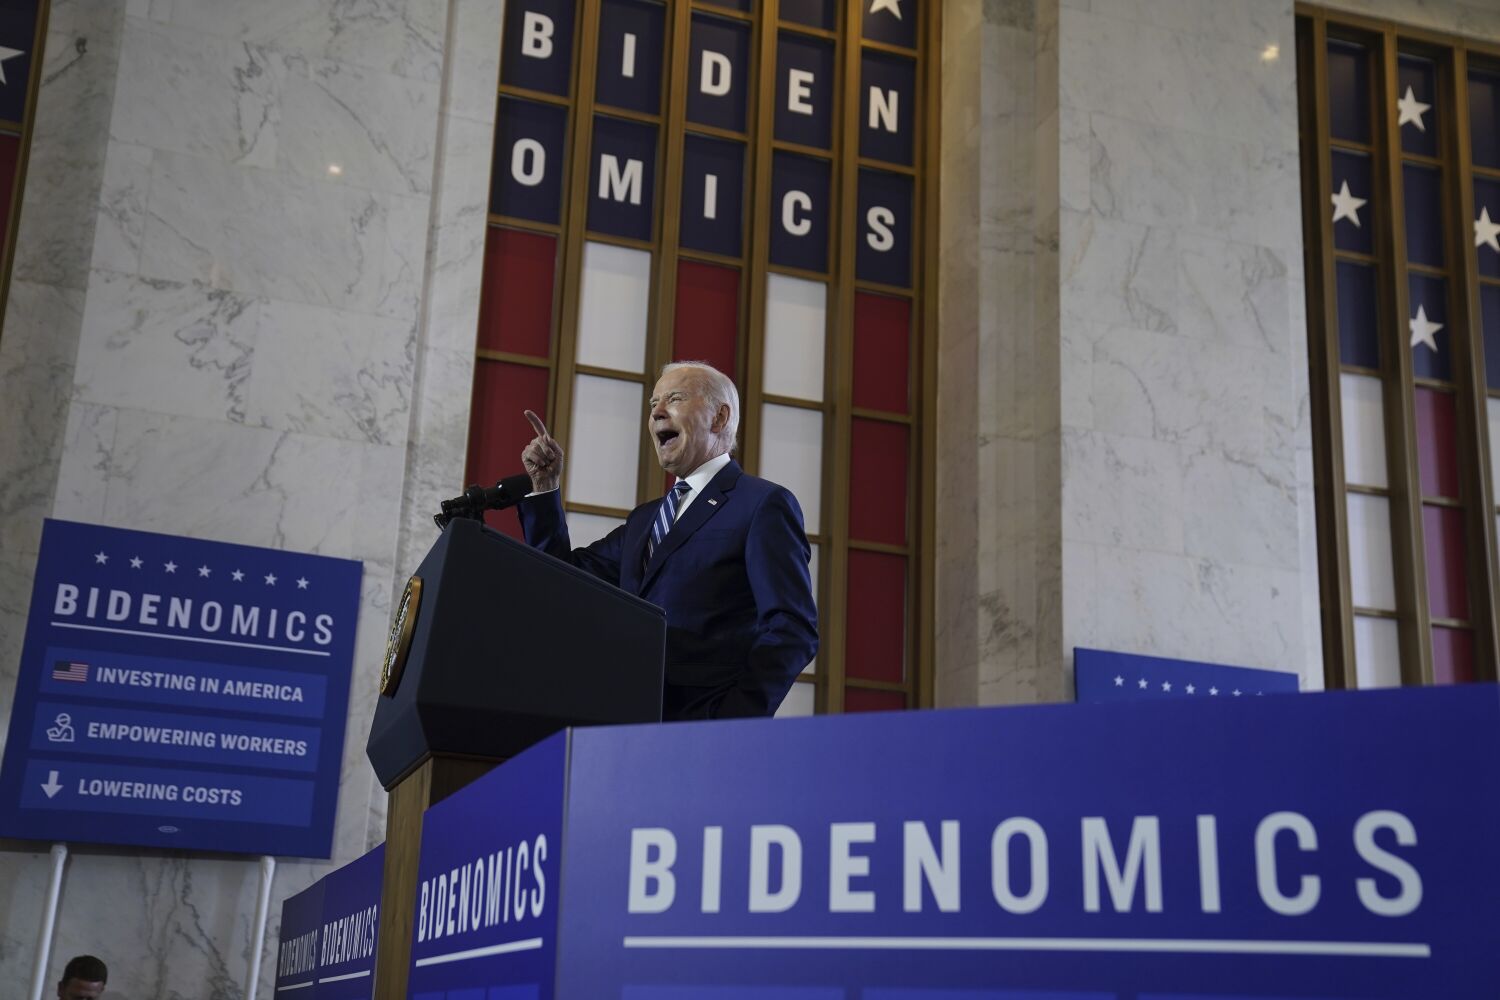 Biden leans into 'Bidenomics' to boost his economic message ahead of 2024